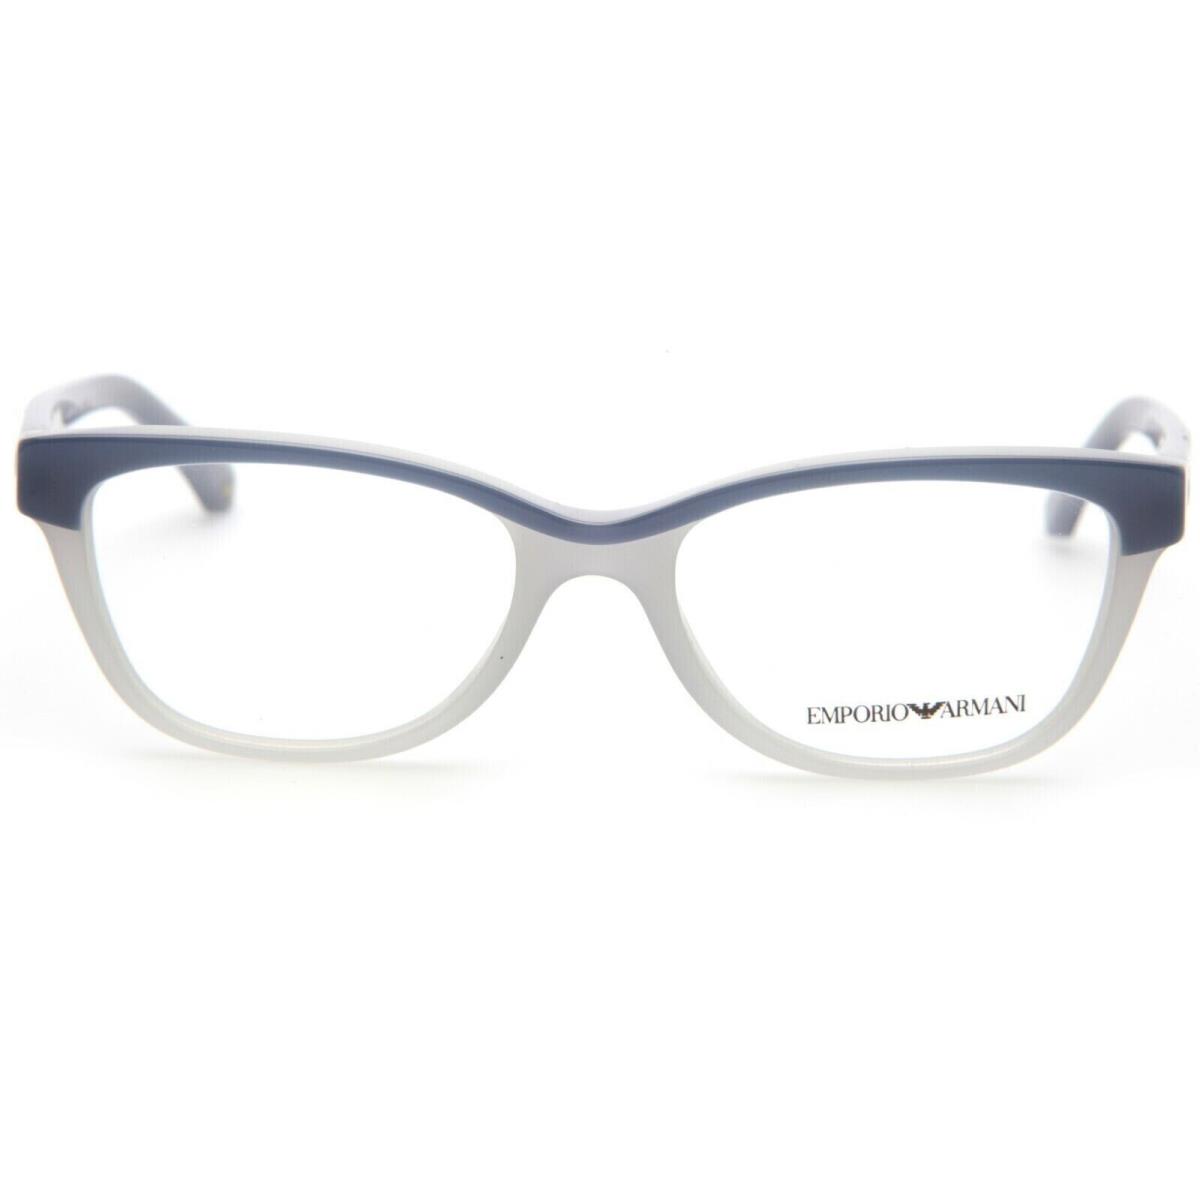 Emporio Armani EA3015 Blue/clear 5109 Cat Eye Plastic Eyeglasses Frame 51-17-140